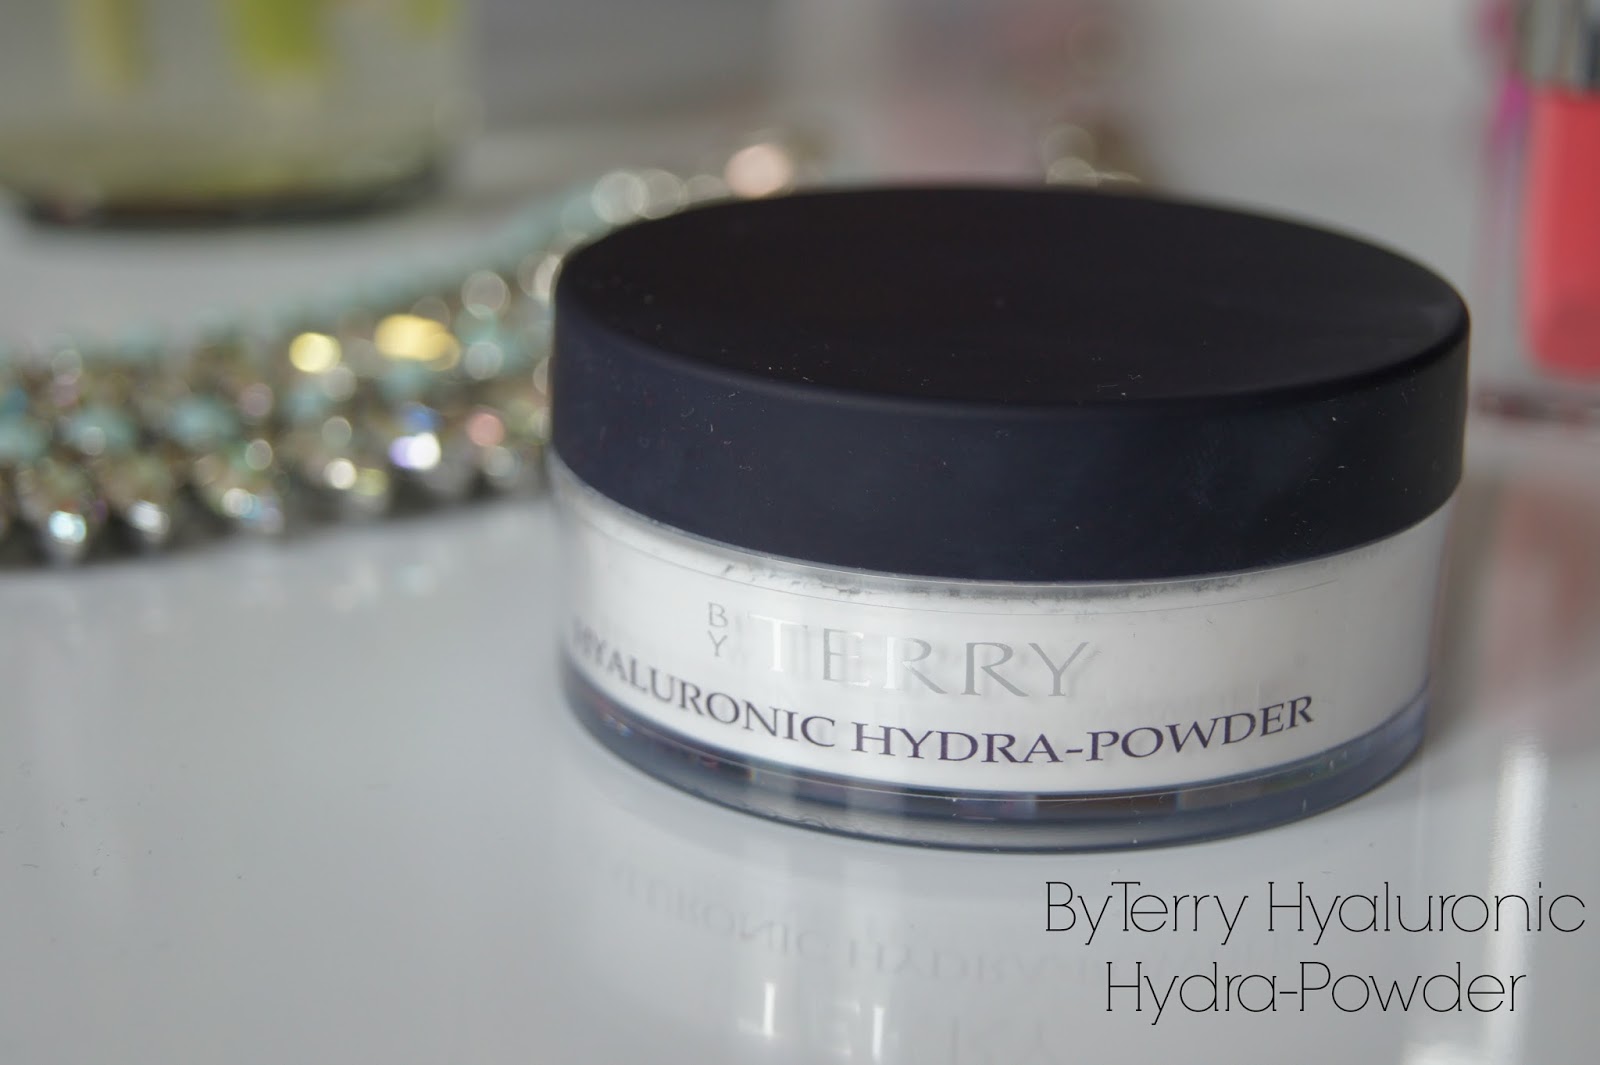 terry hyaluronic hydra powder